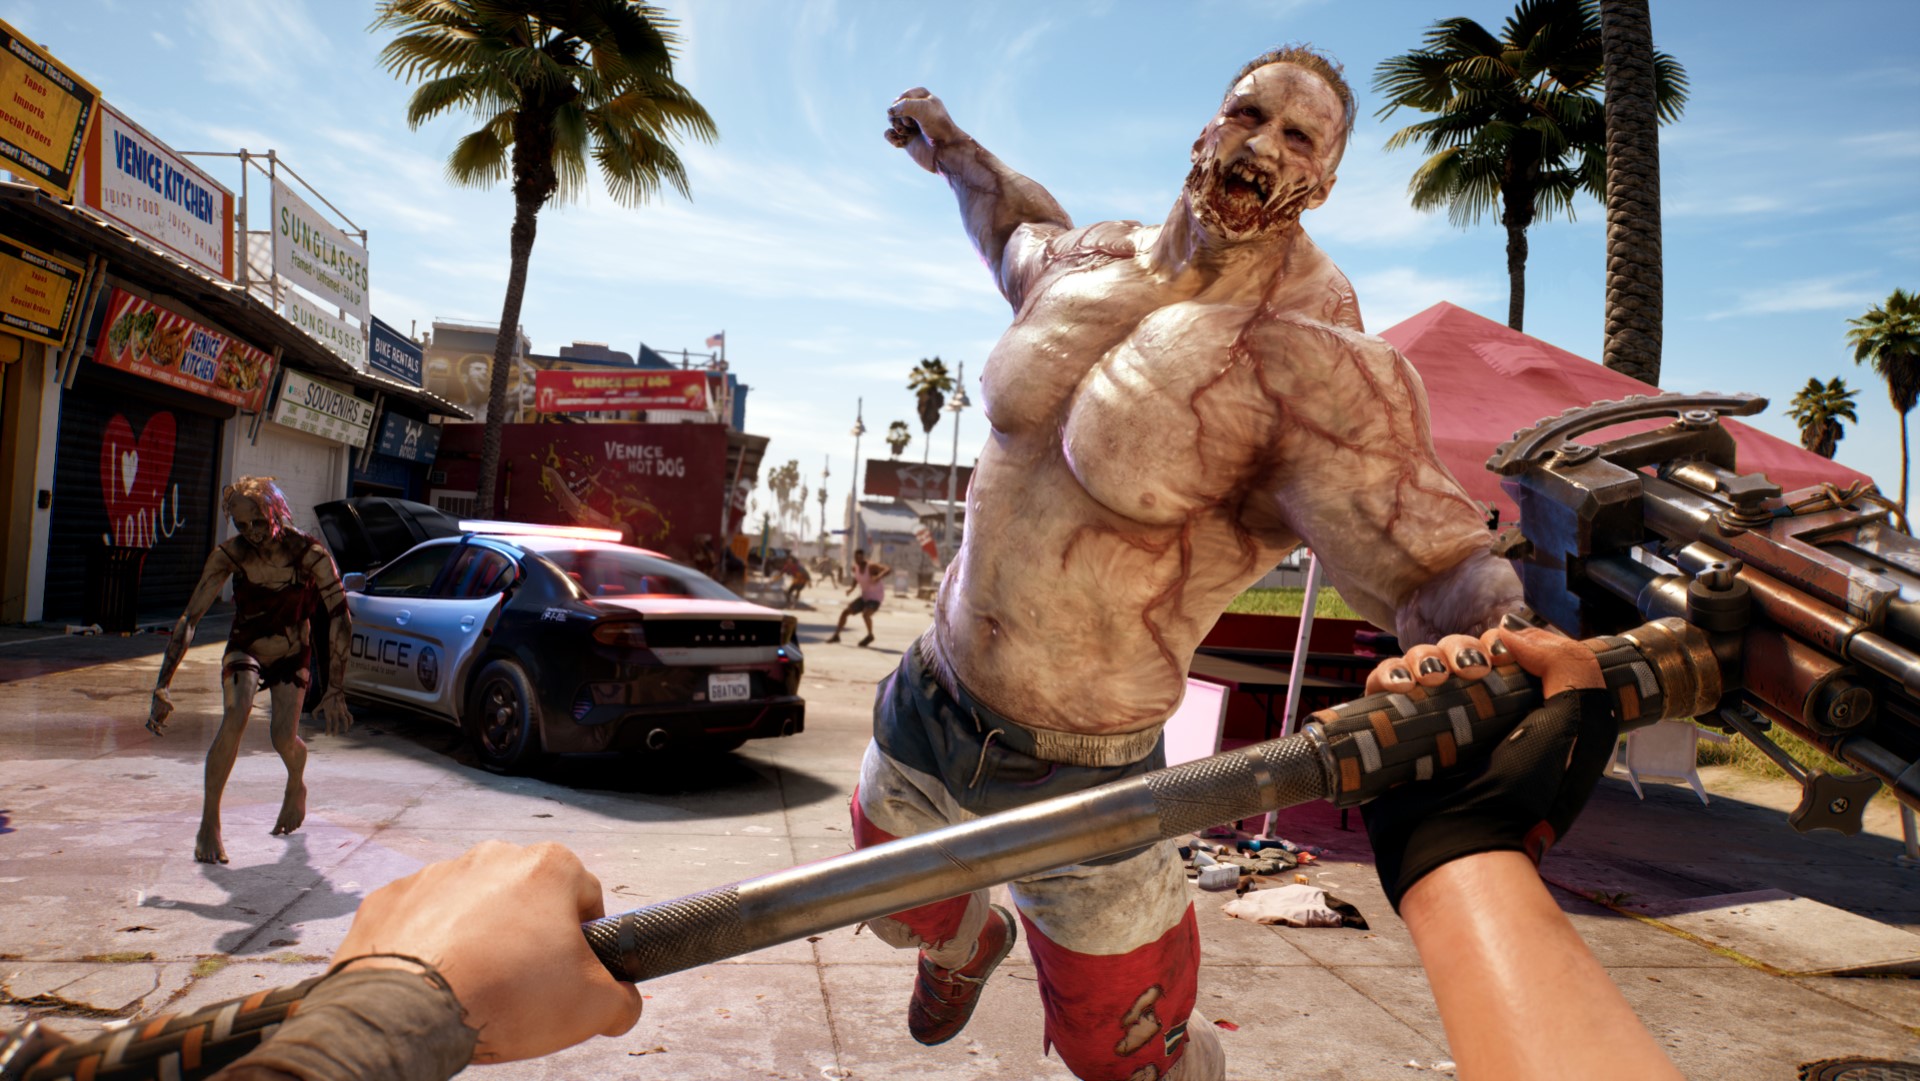 Dead Island 2 release date announced, and it's set in LA